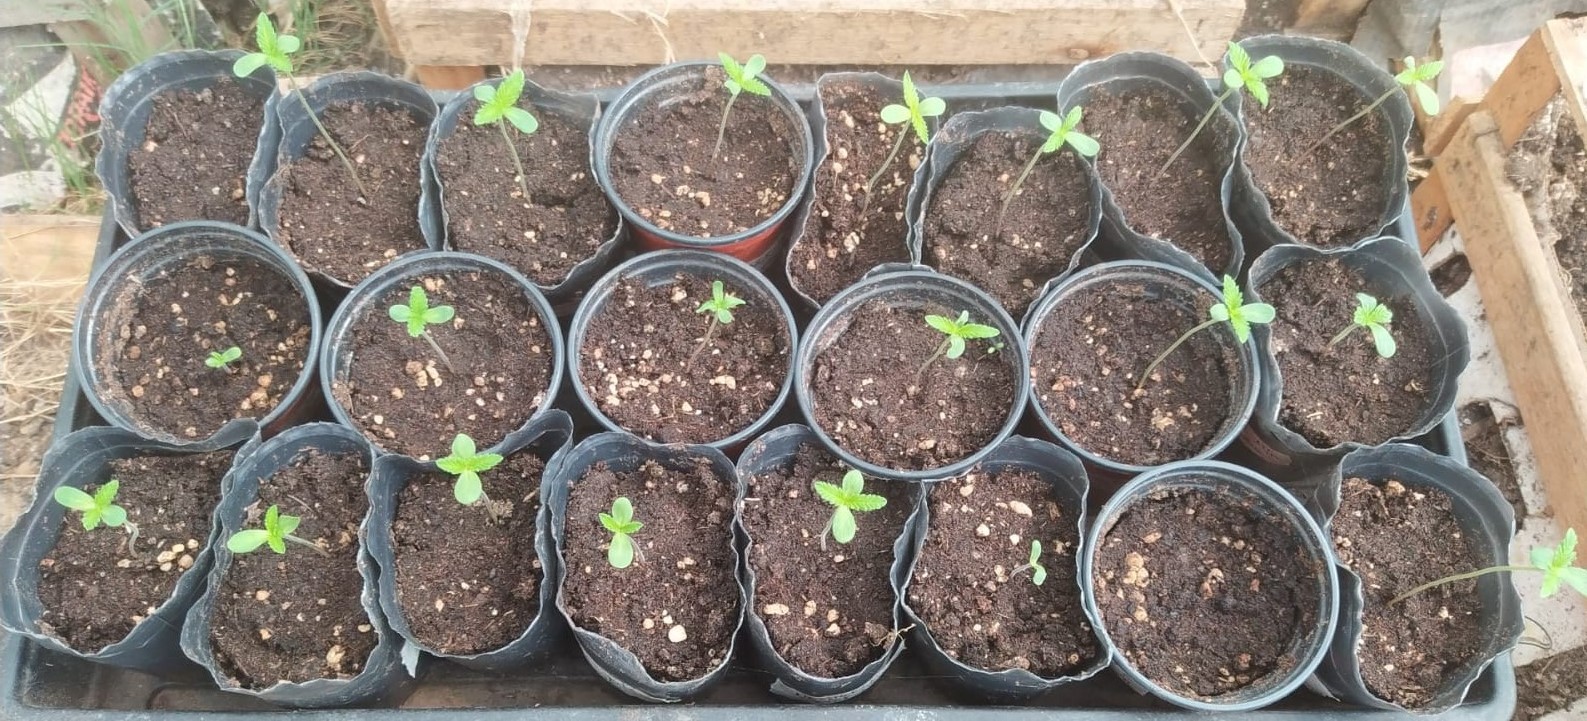 NL5 x Hz grow germination (1).jpeg